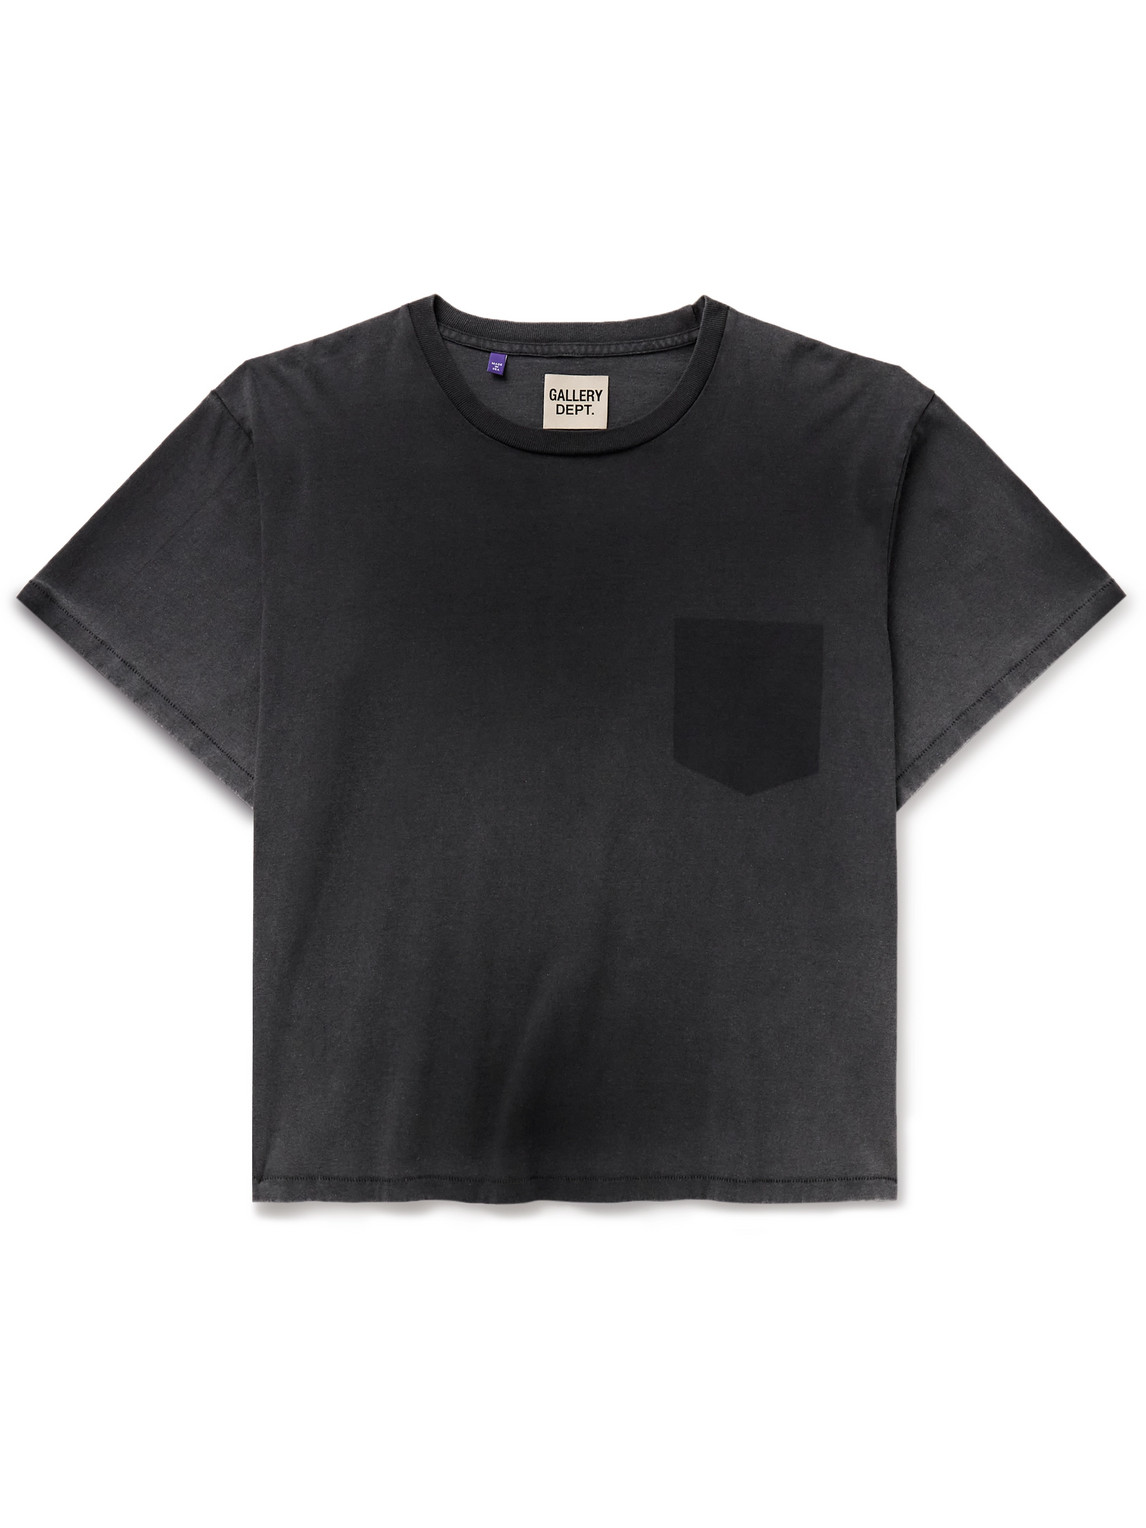 Gallery Dept. Boardwalk Cotton-jersey T-shirt In Black